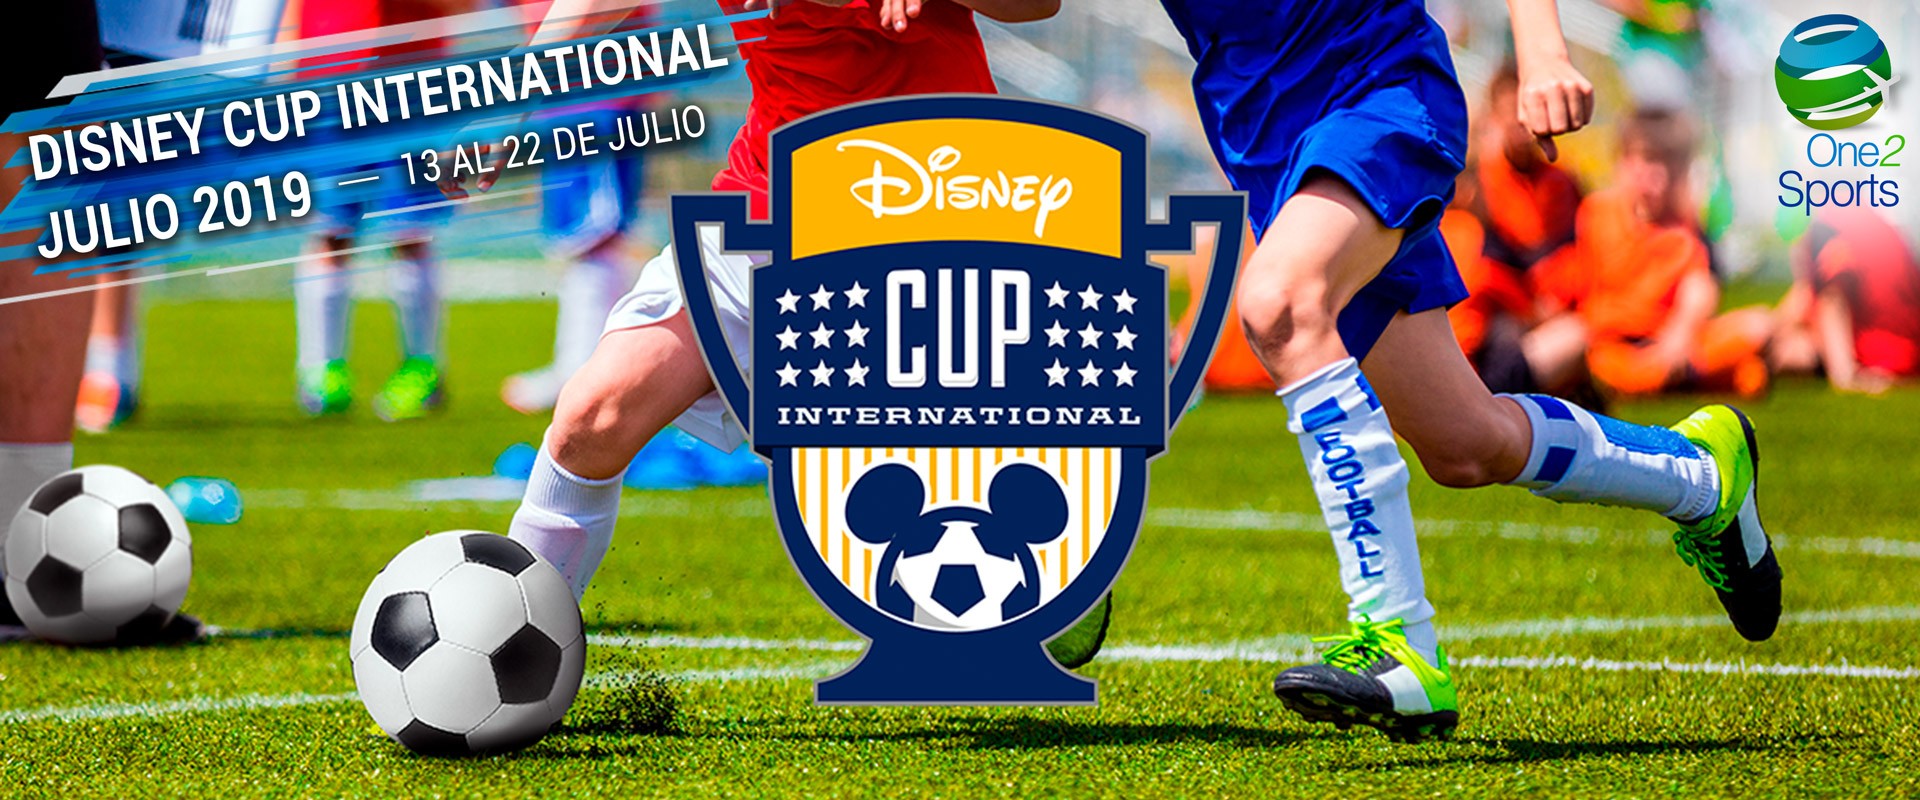 Disney Cup International One2 Travel Group